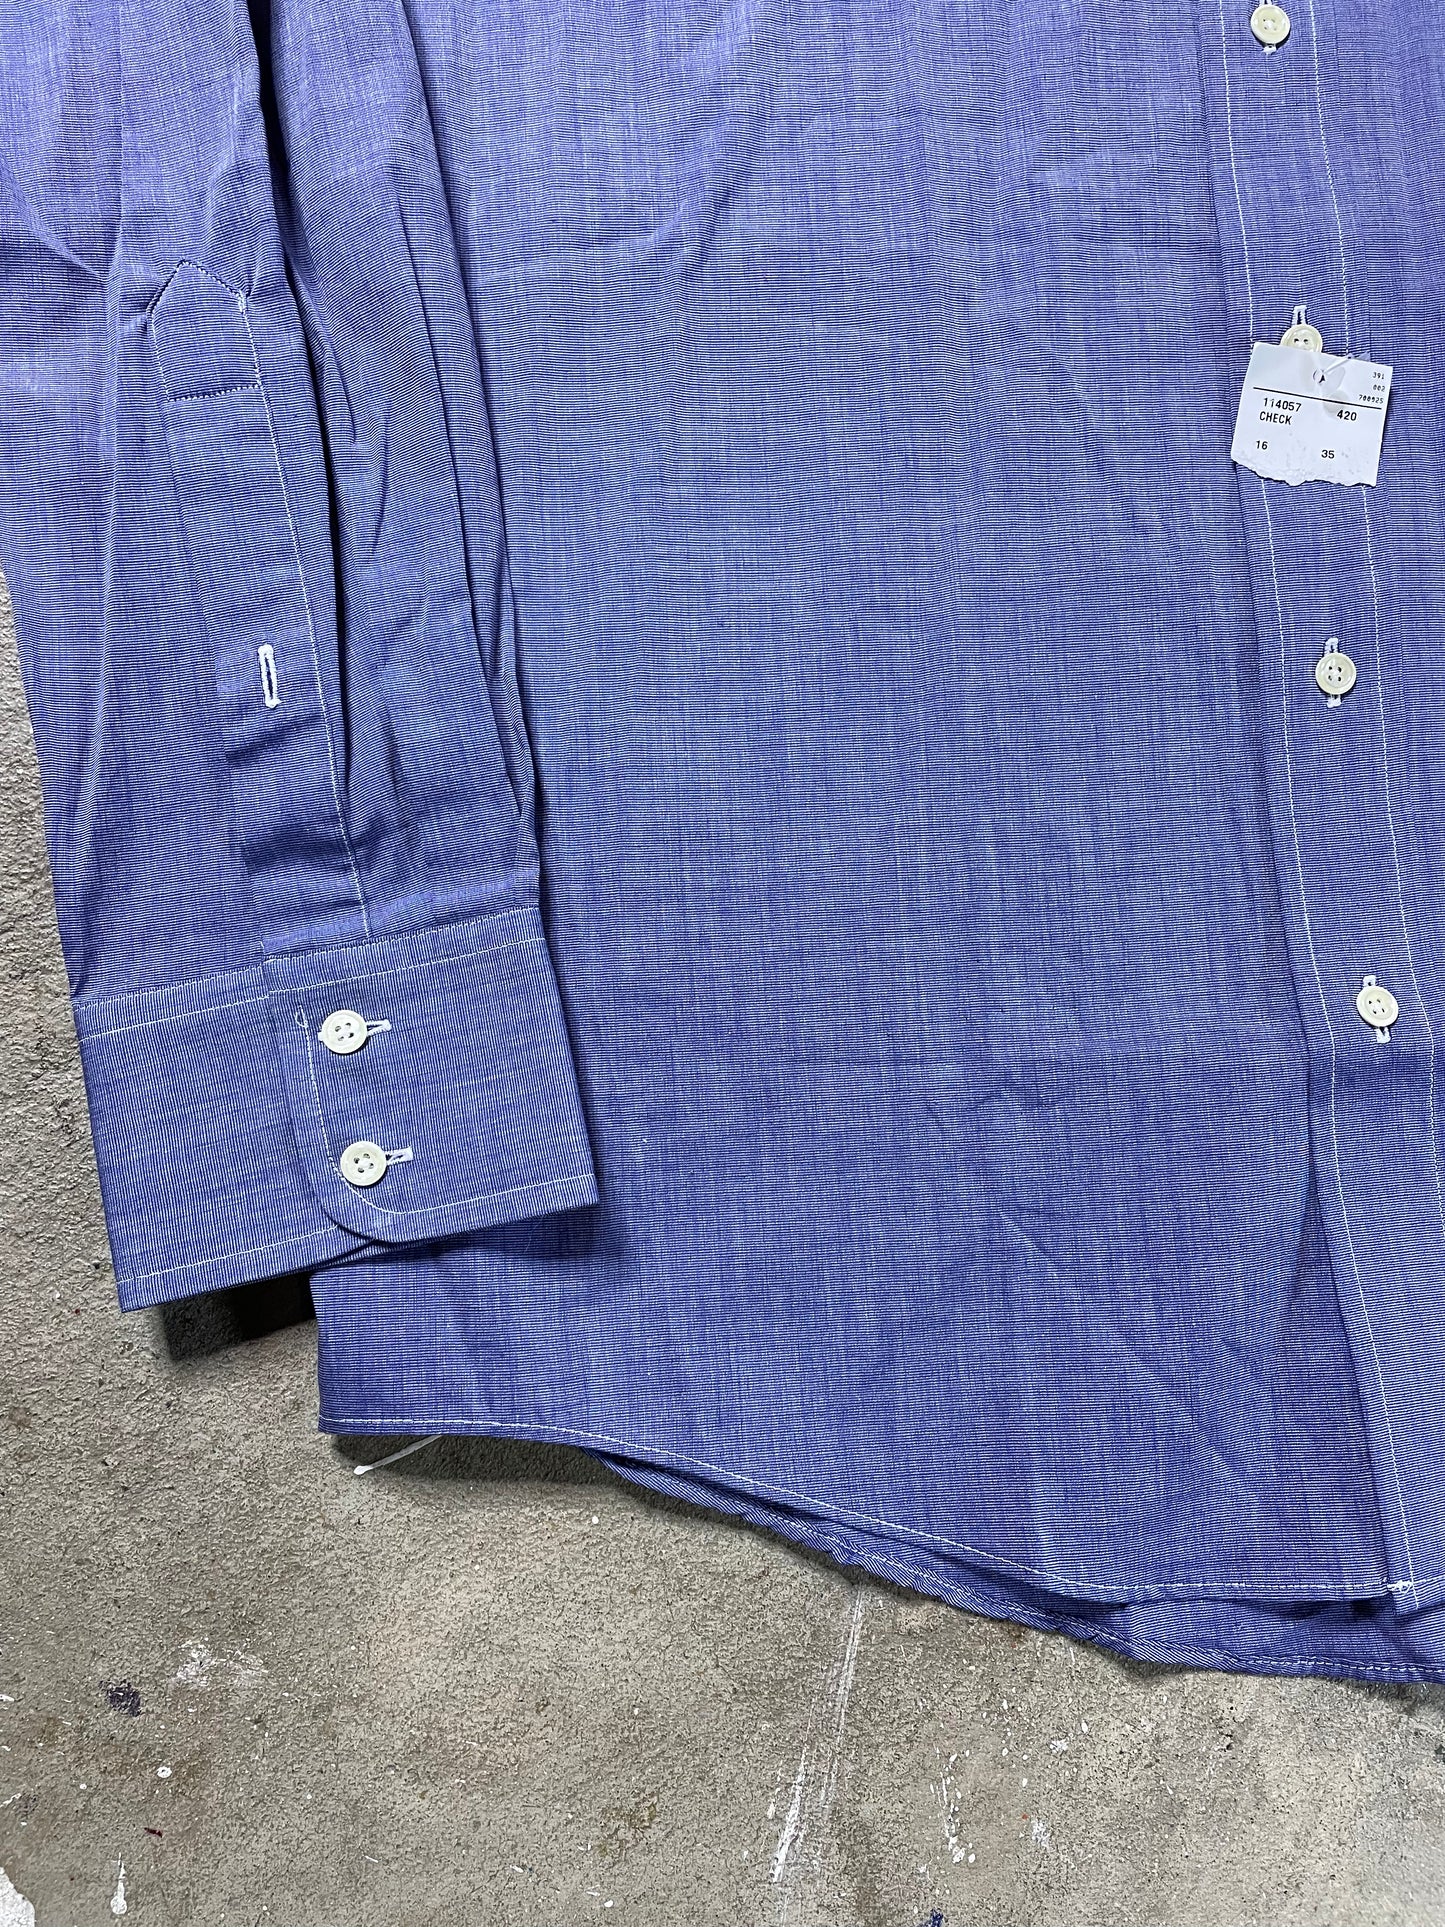 Vintage Burberrys of London Shirt